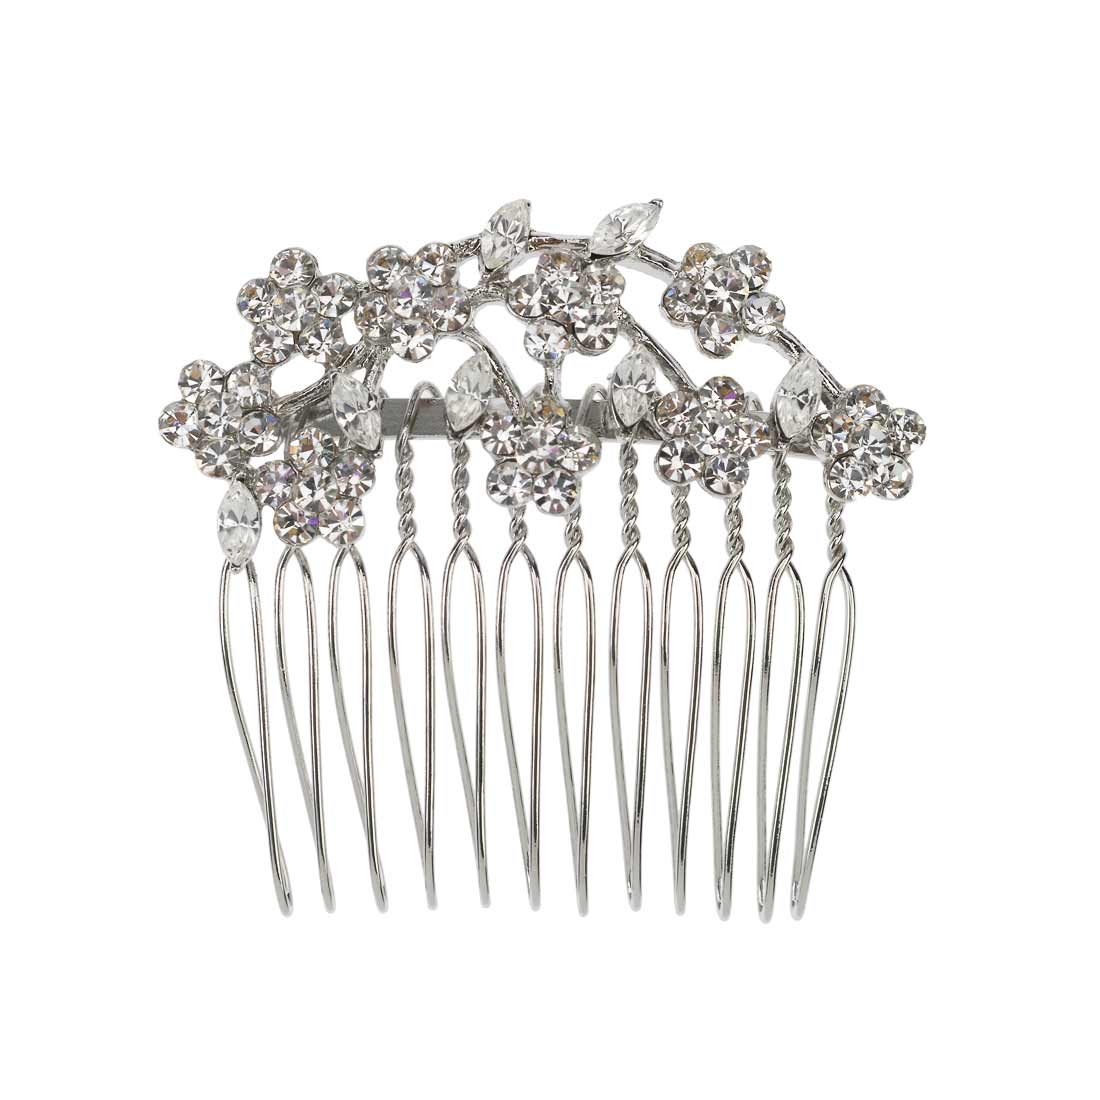 Petite Garland Small Silver Crystal Hair Comb for Brides & Bridesmaids